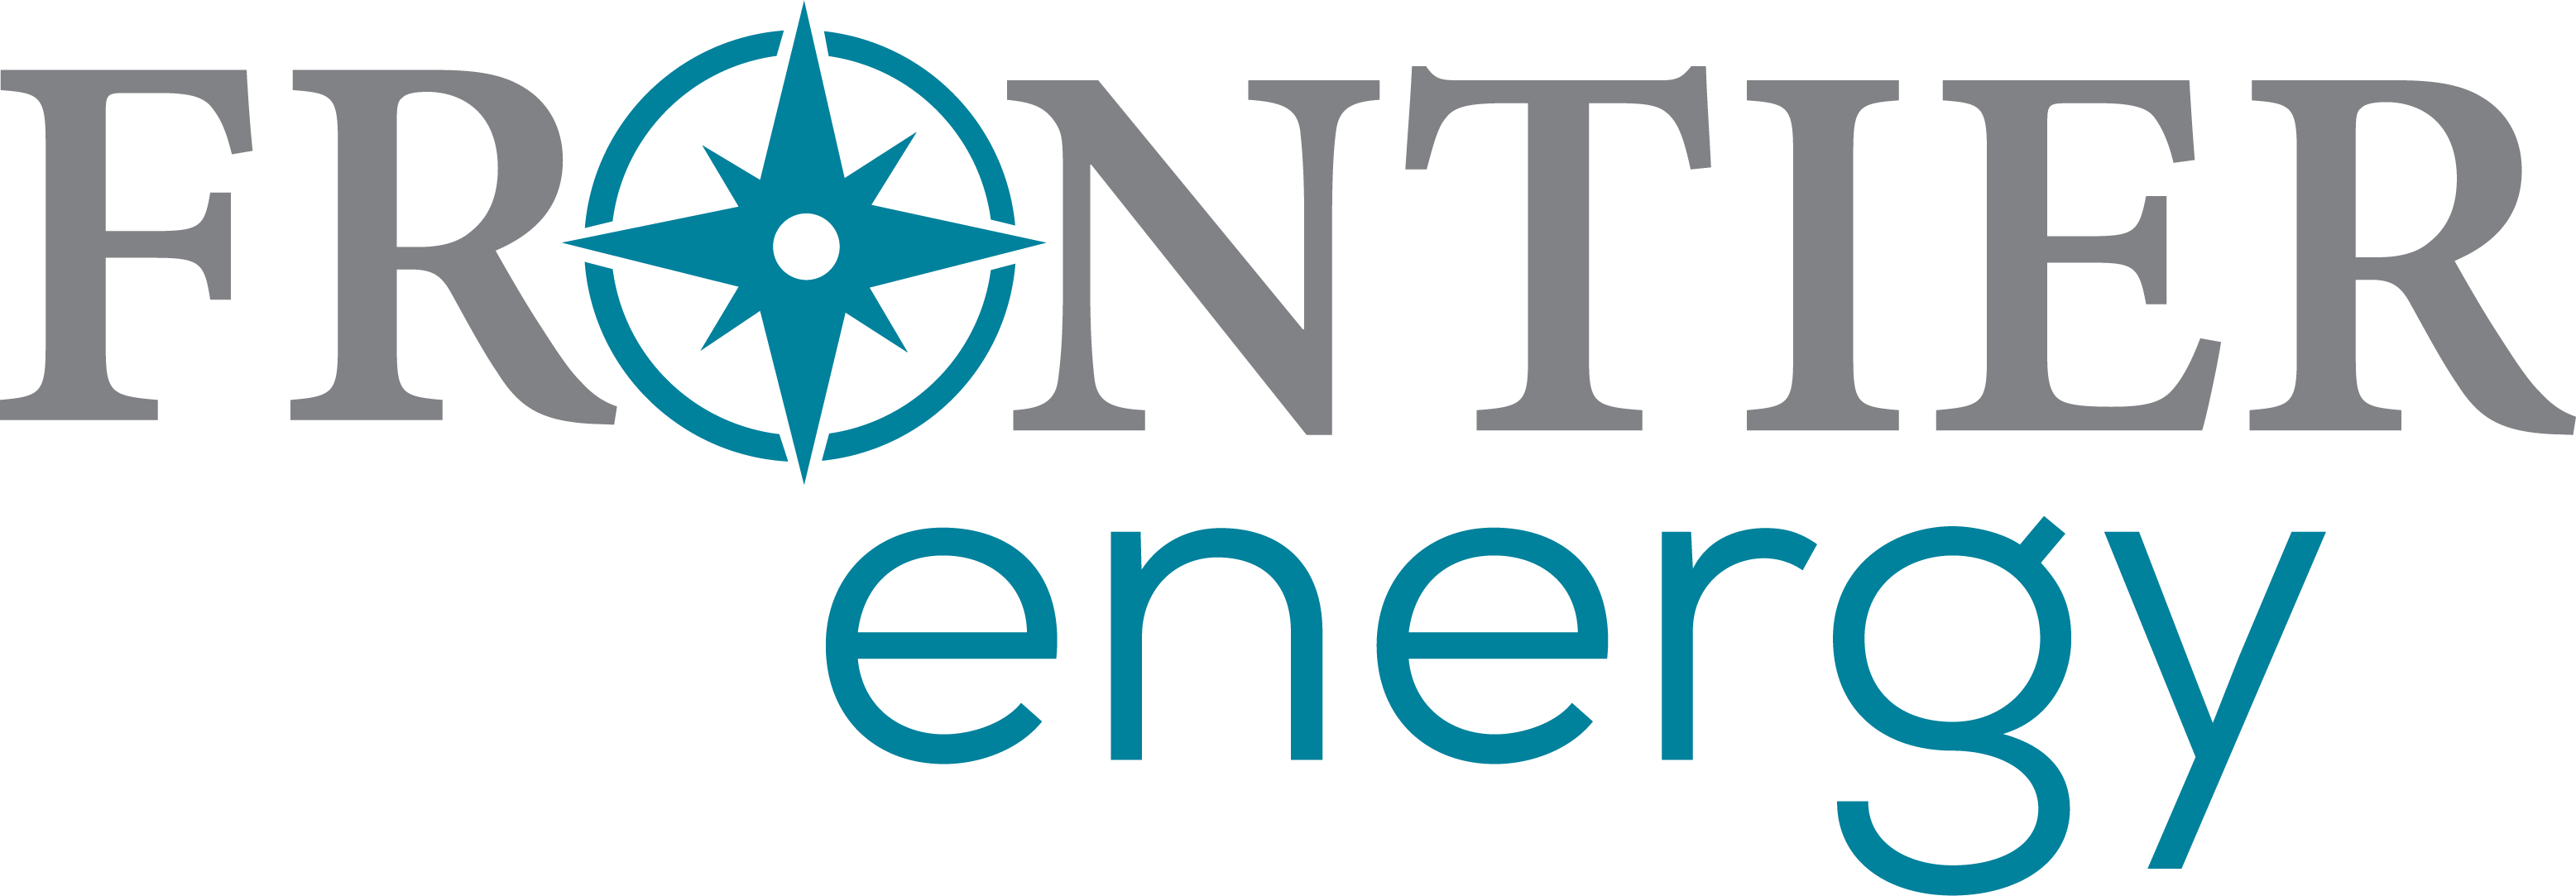 frontier_energy_logo